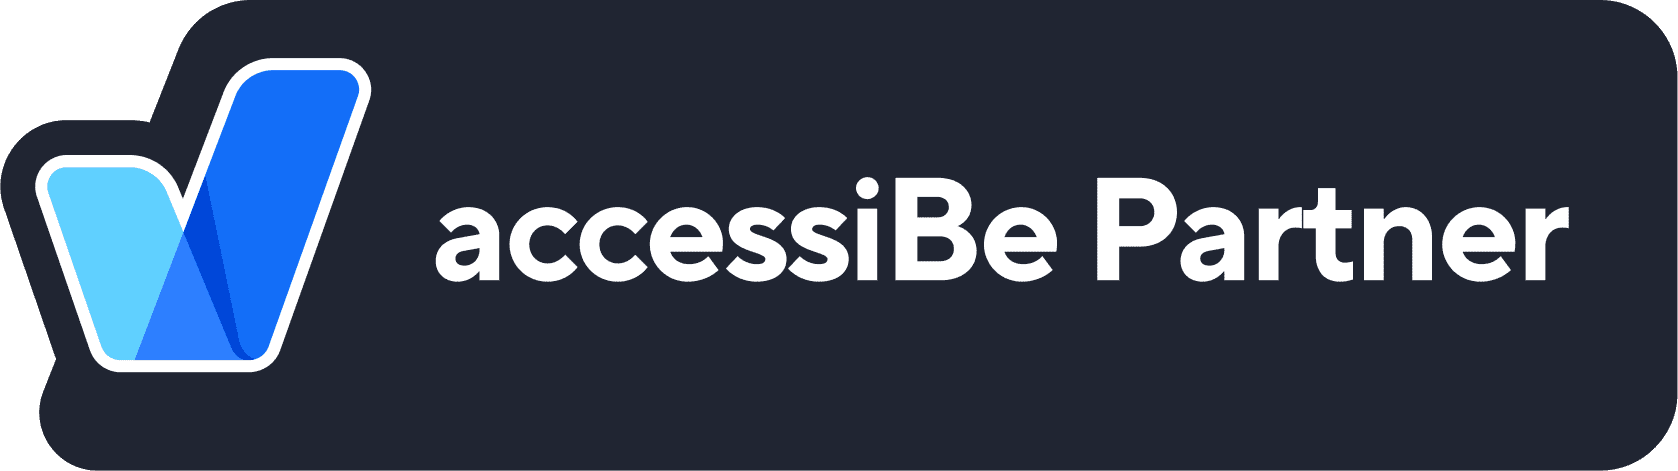 AccessiBe Partner badge